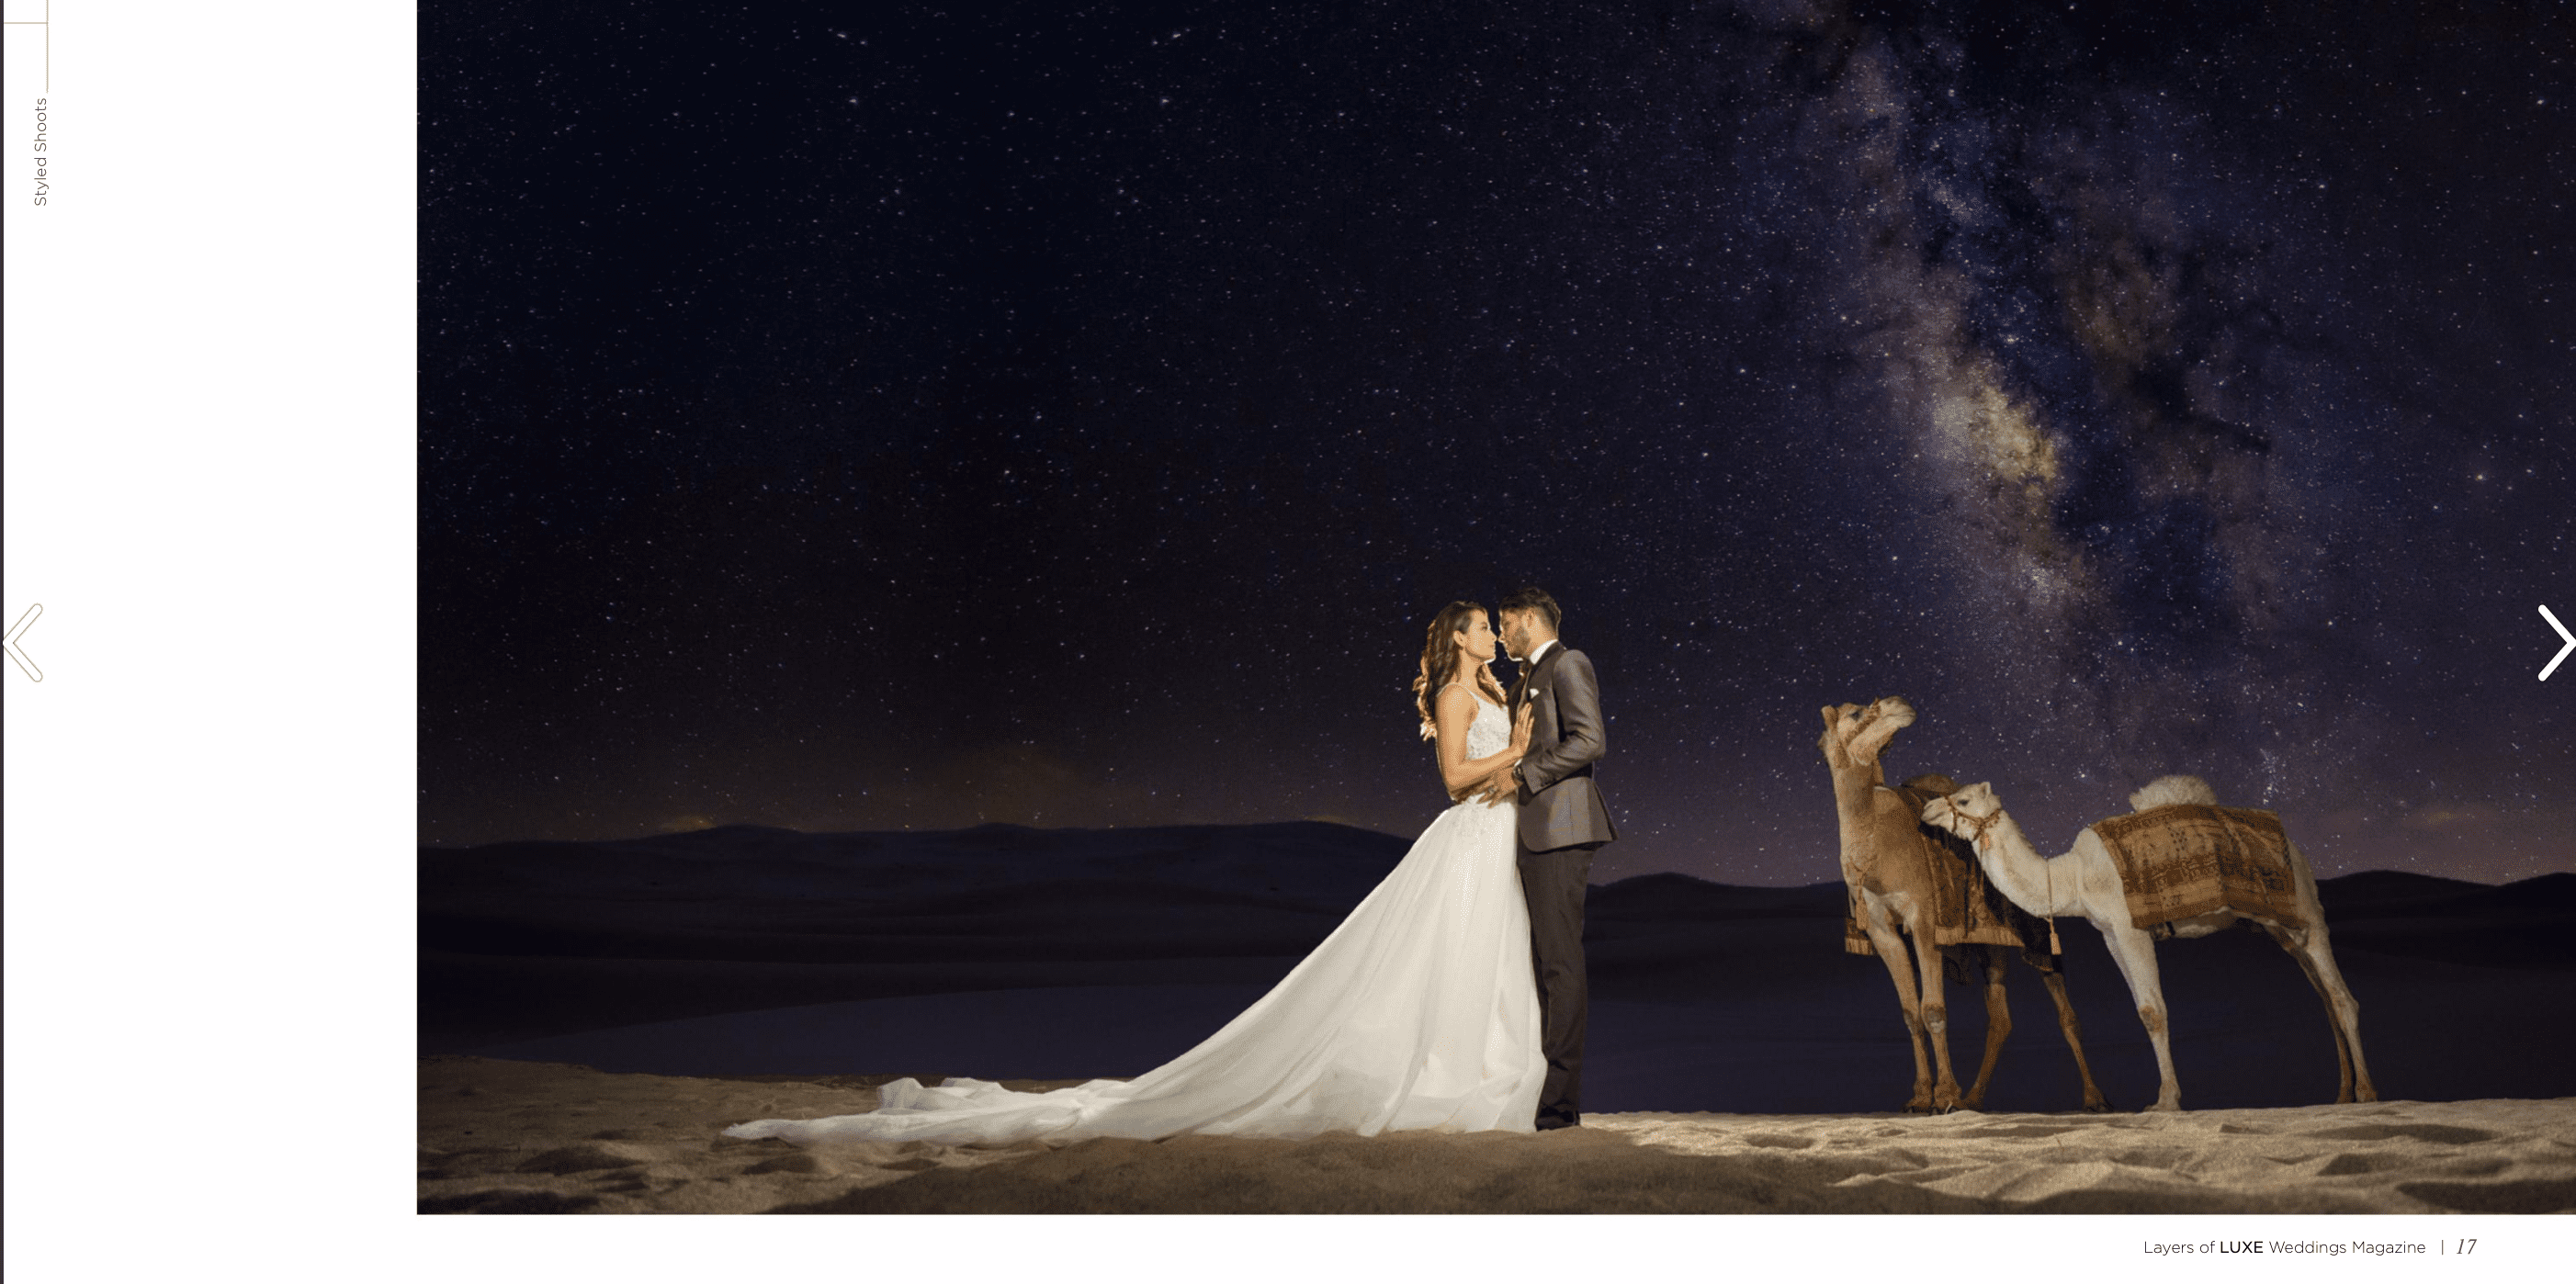 Wedding in desert screenshot